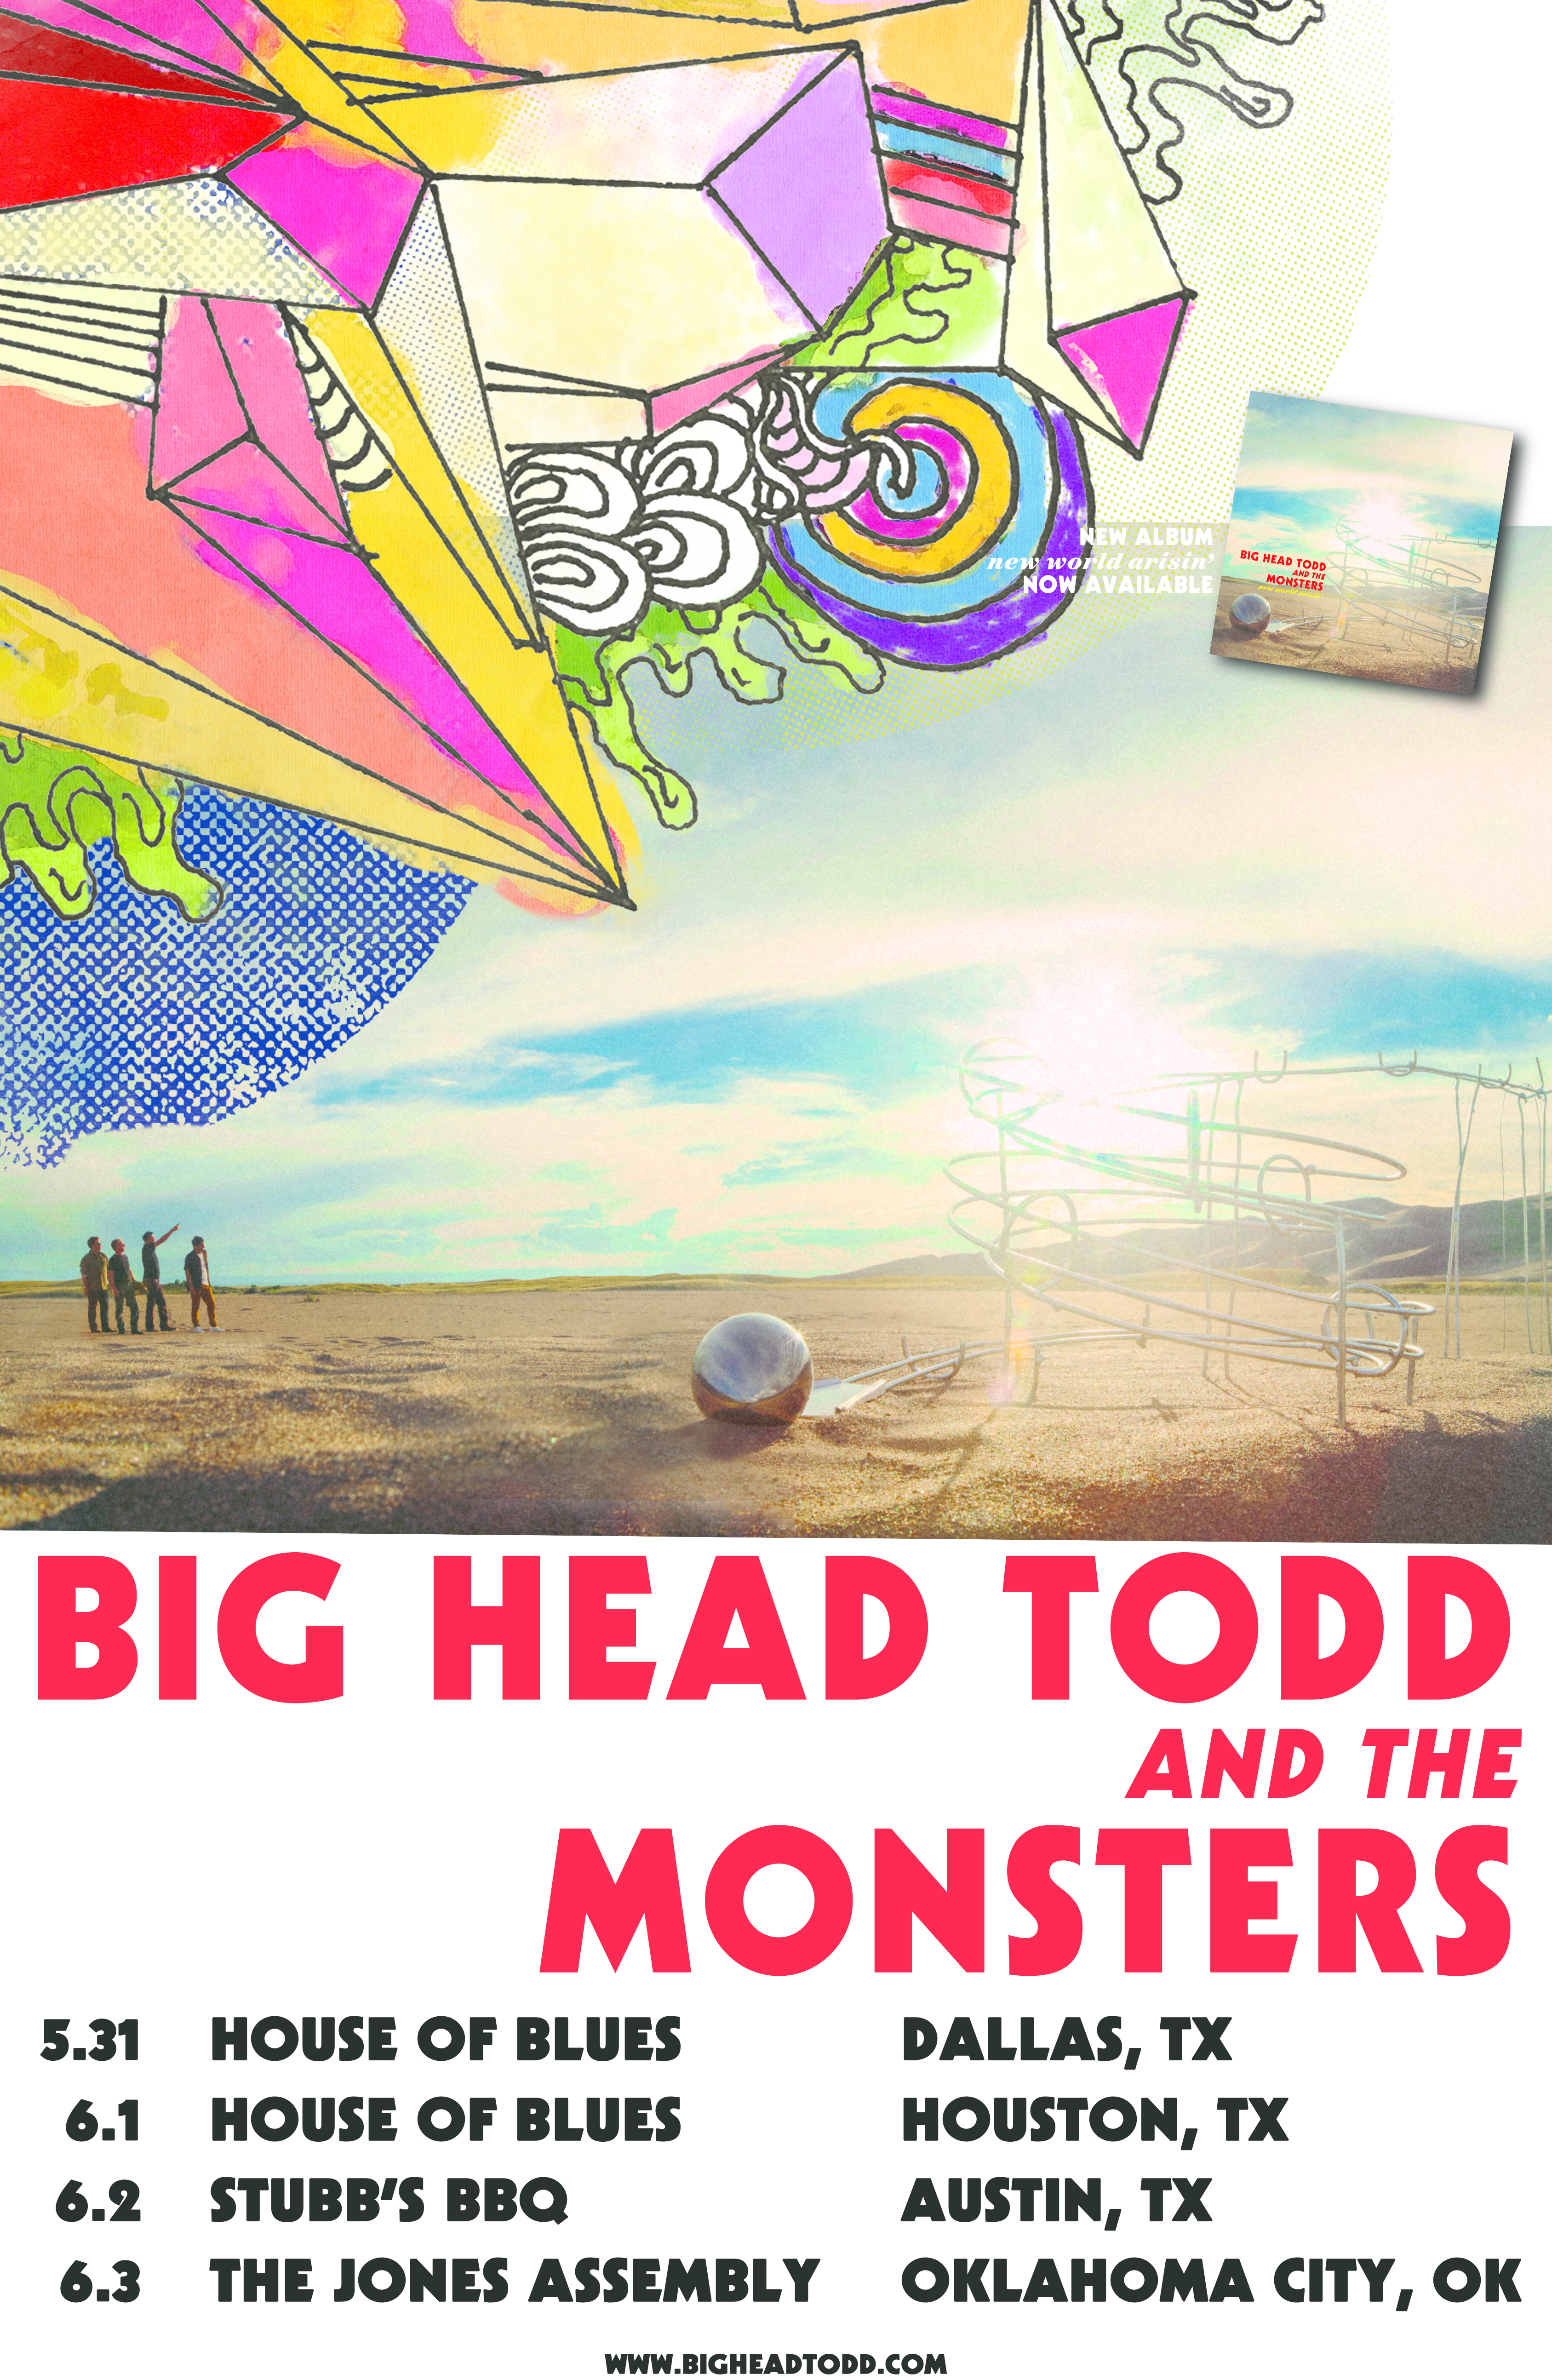 More Big Head Todd TEXAS tour dates announced!